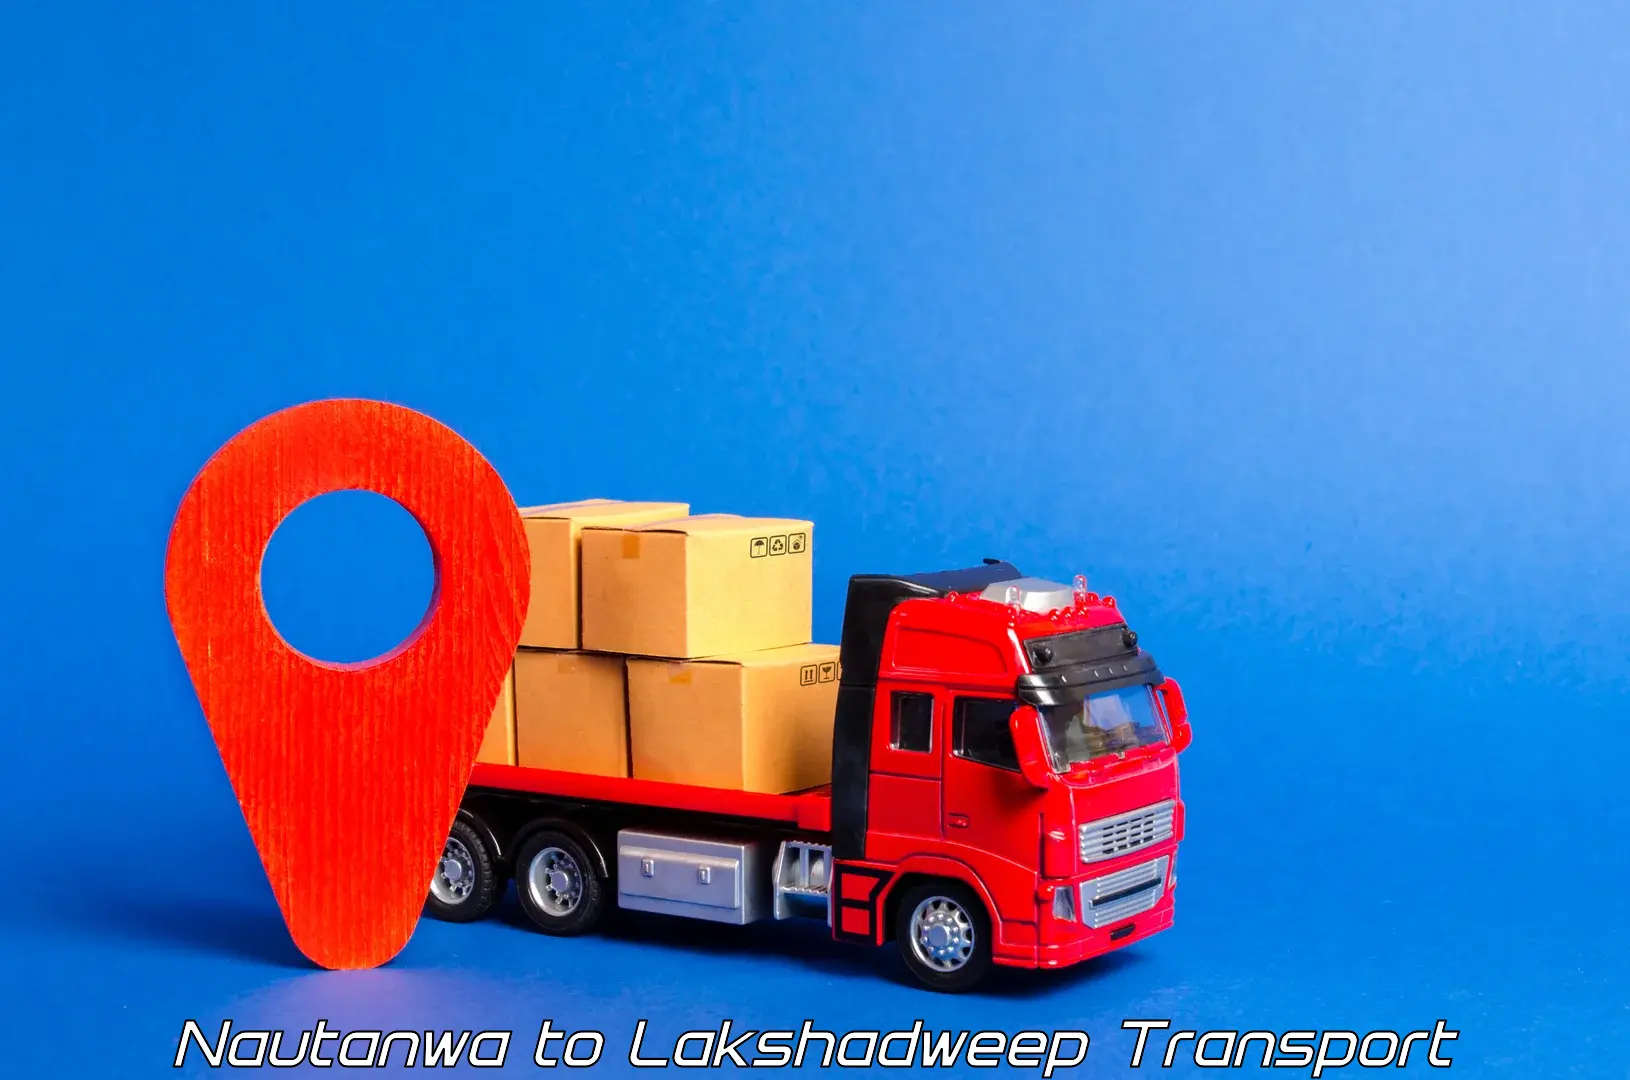 Commercial transport service Nautanwa to Lakshadweep